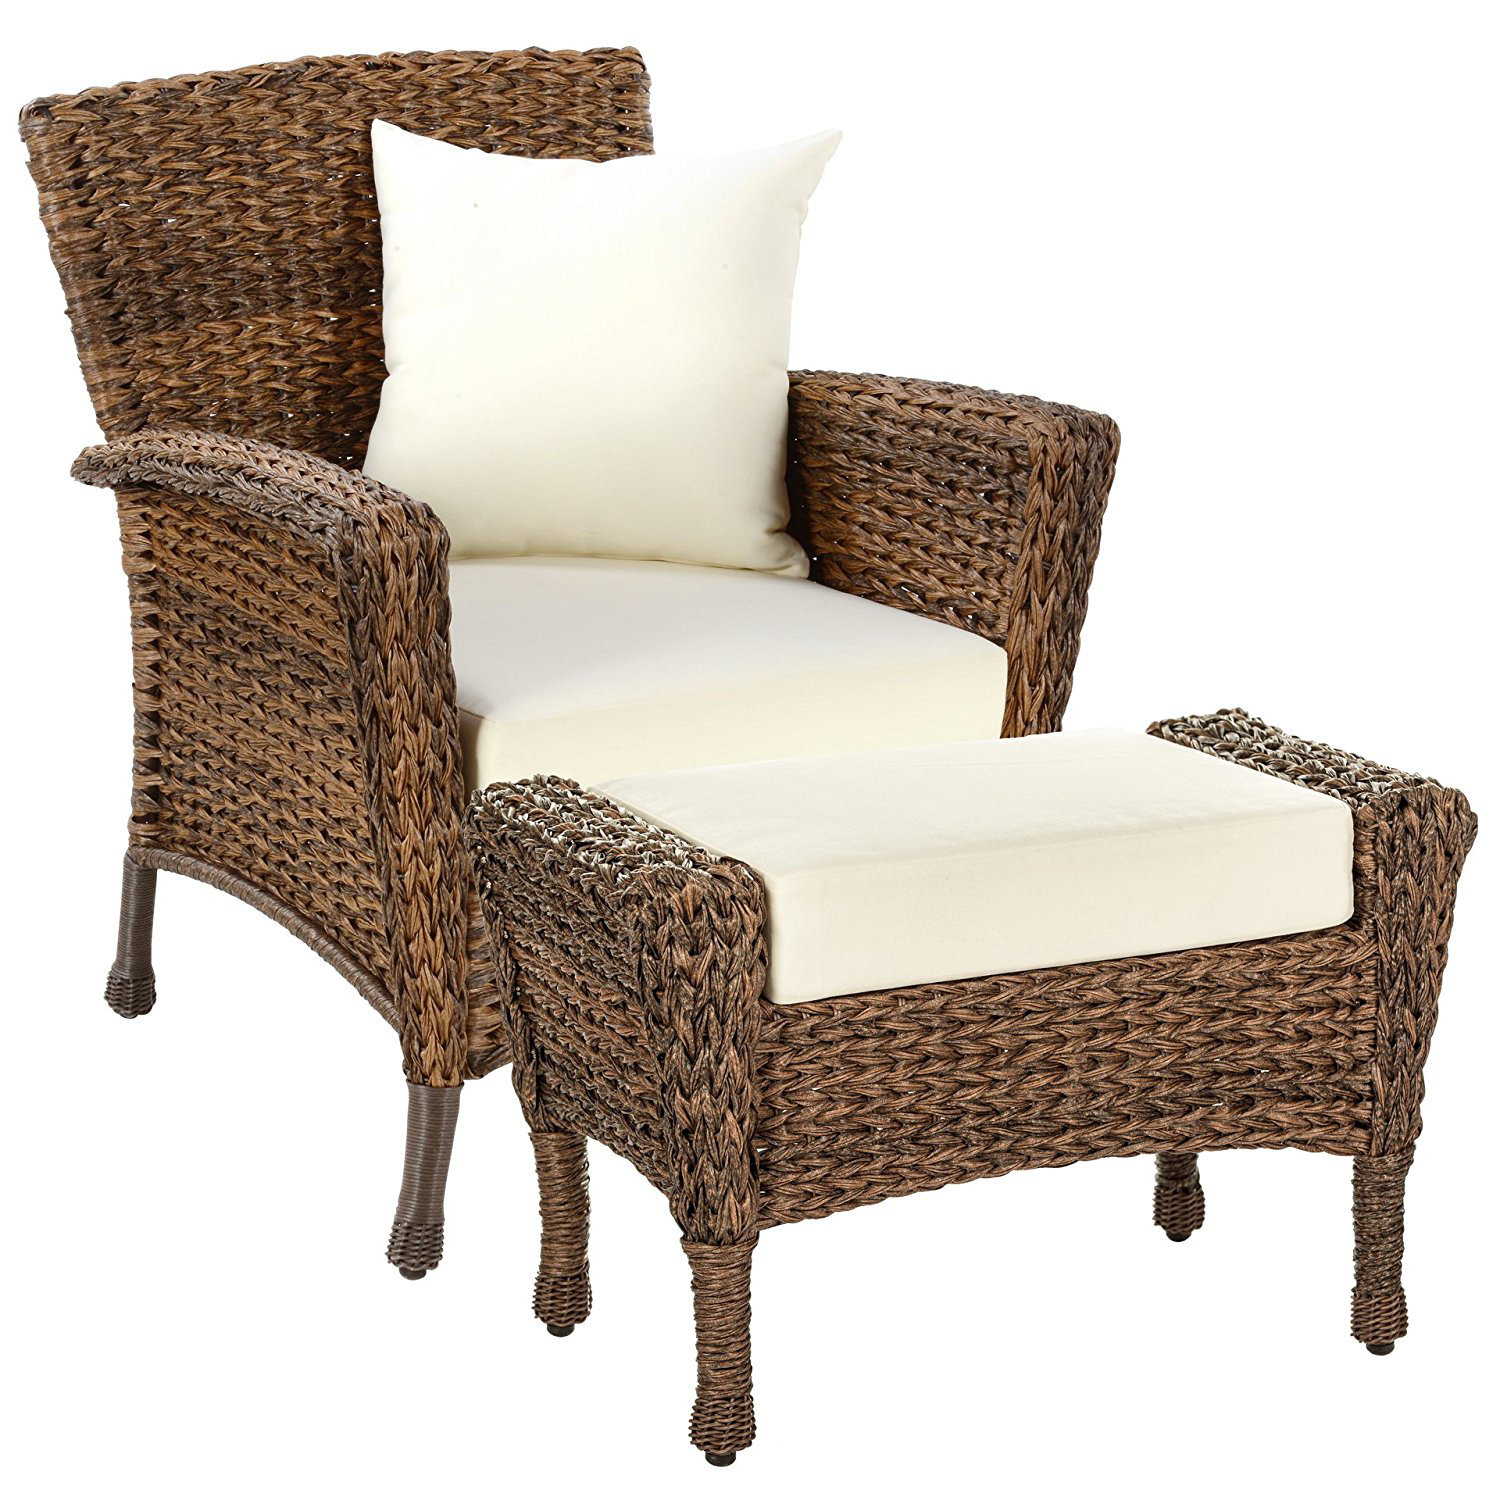 August Grove Rutter Garden Patio Chair With Cushions And Ottoman Wayfair